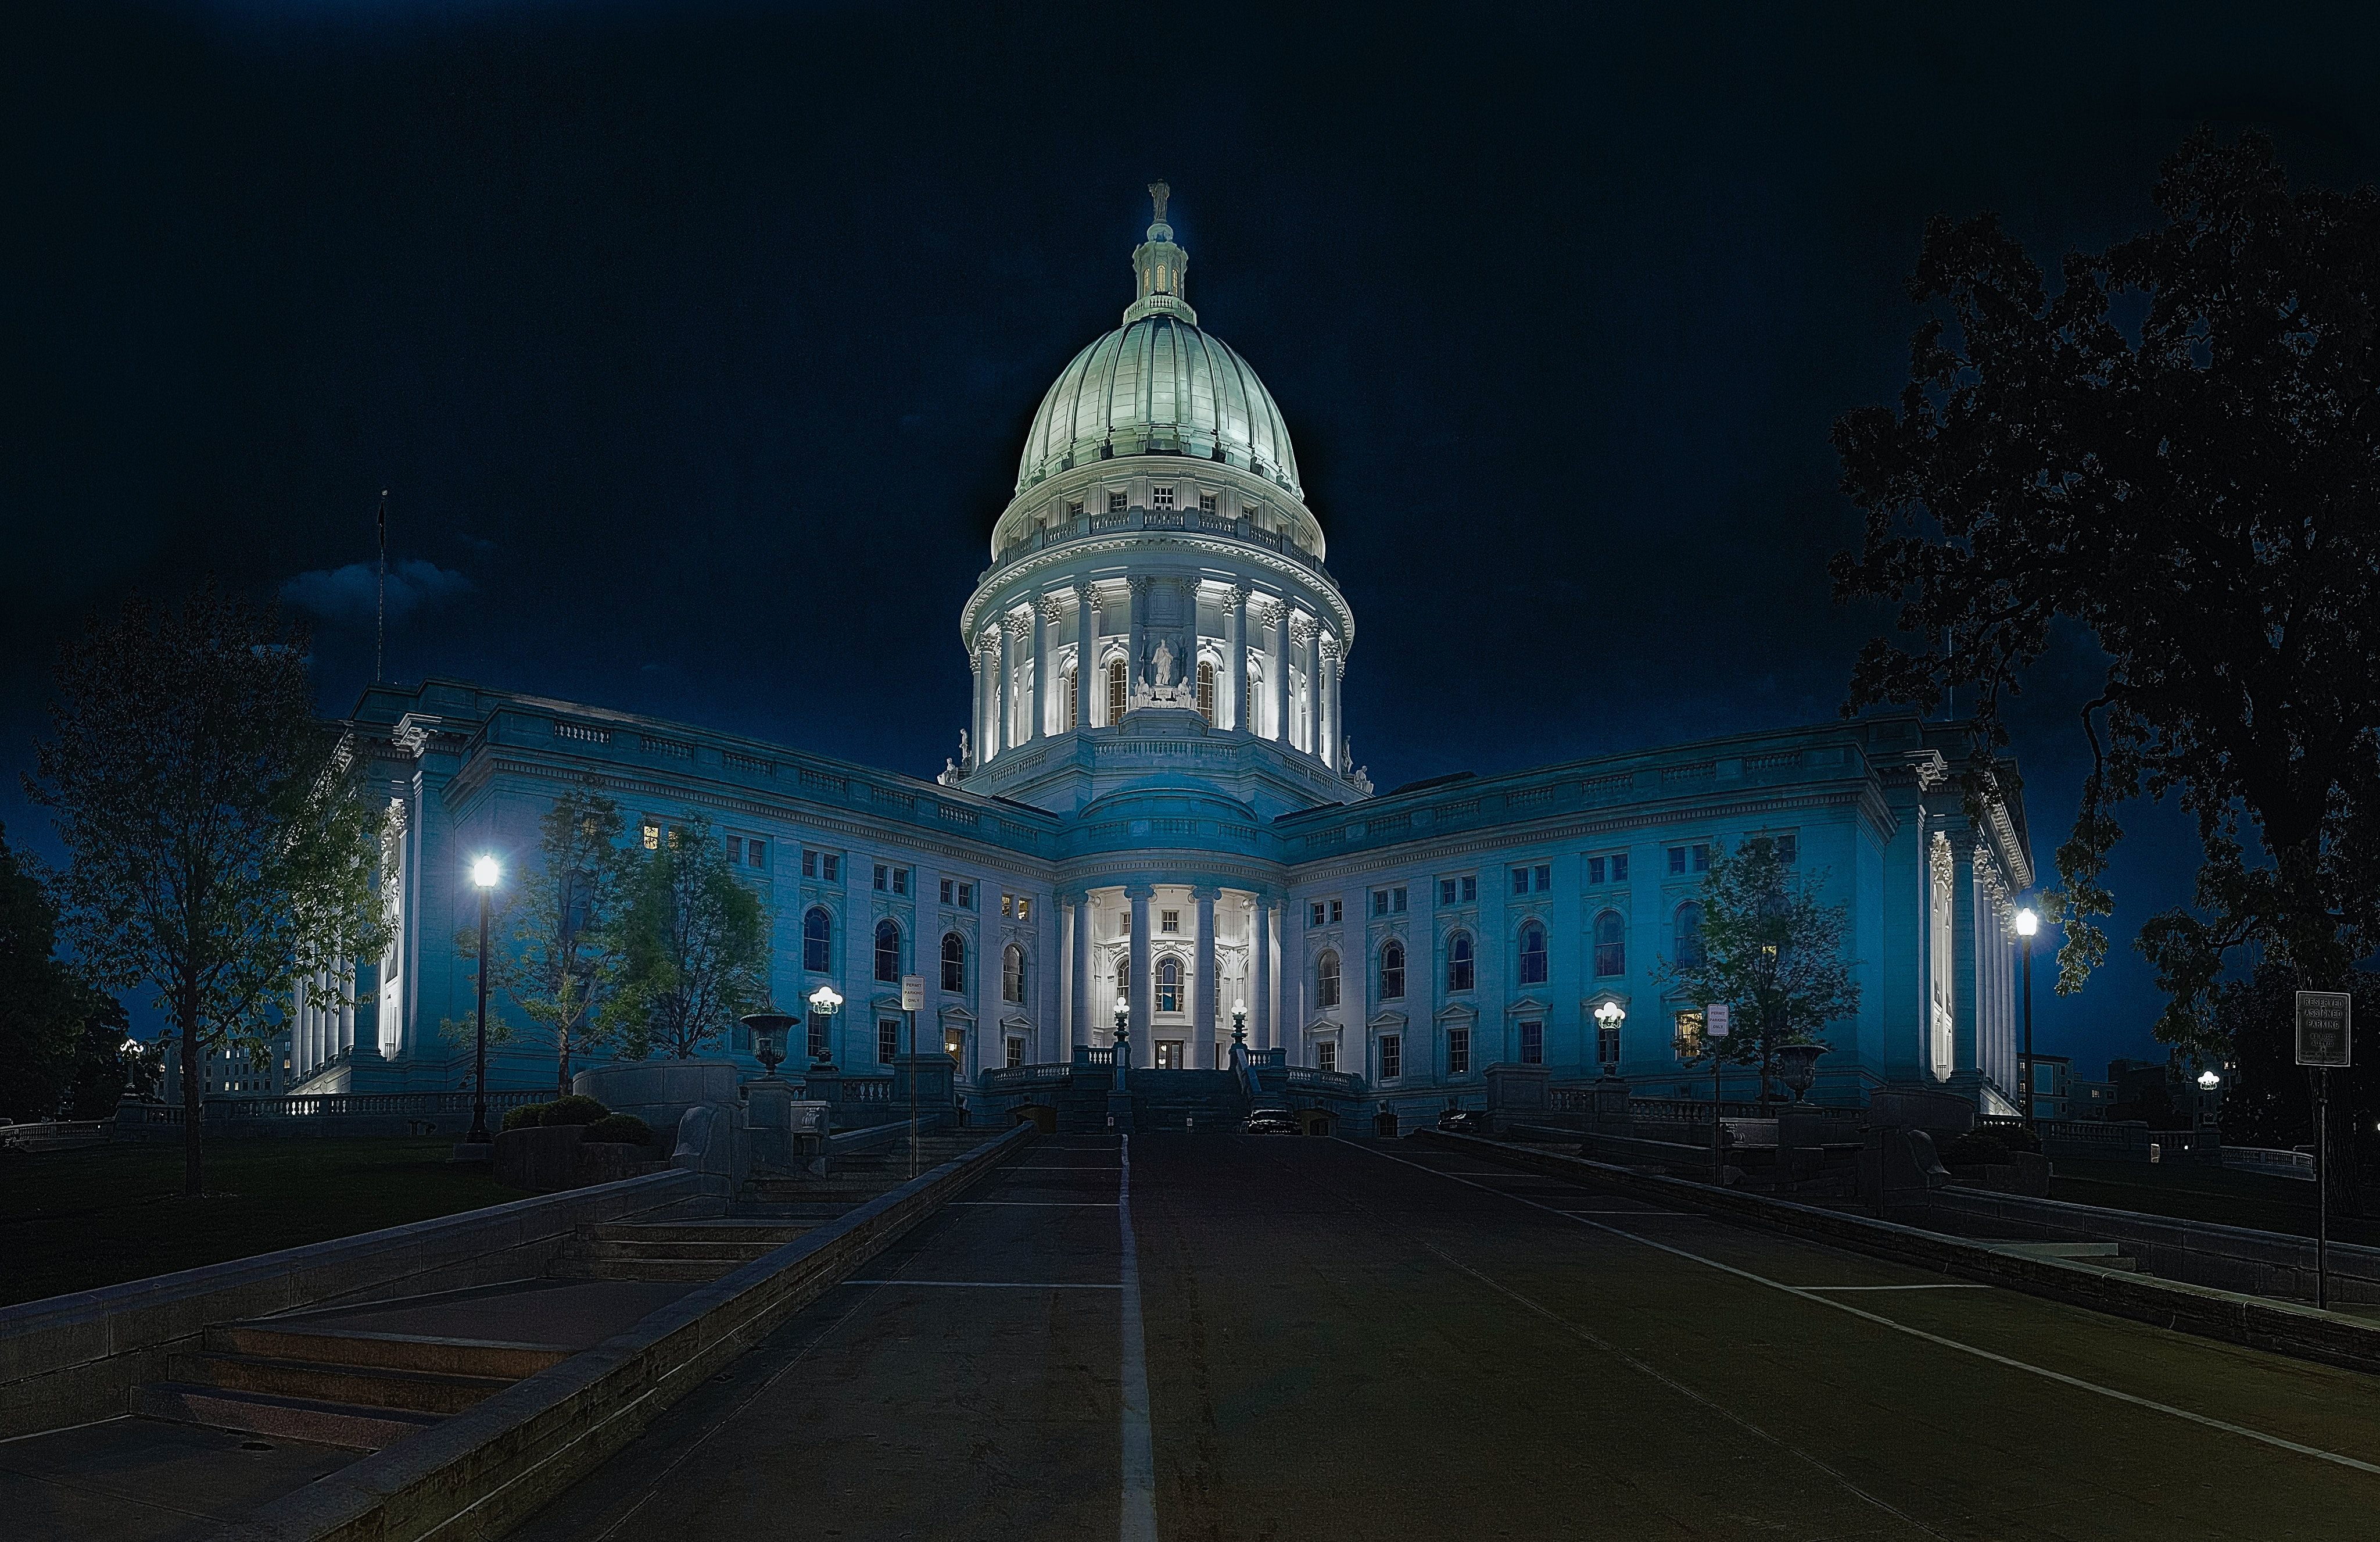 Capitol building at night; image by Michael, via Unsplash.com.